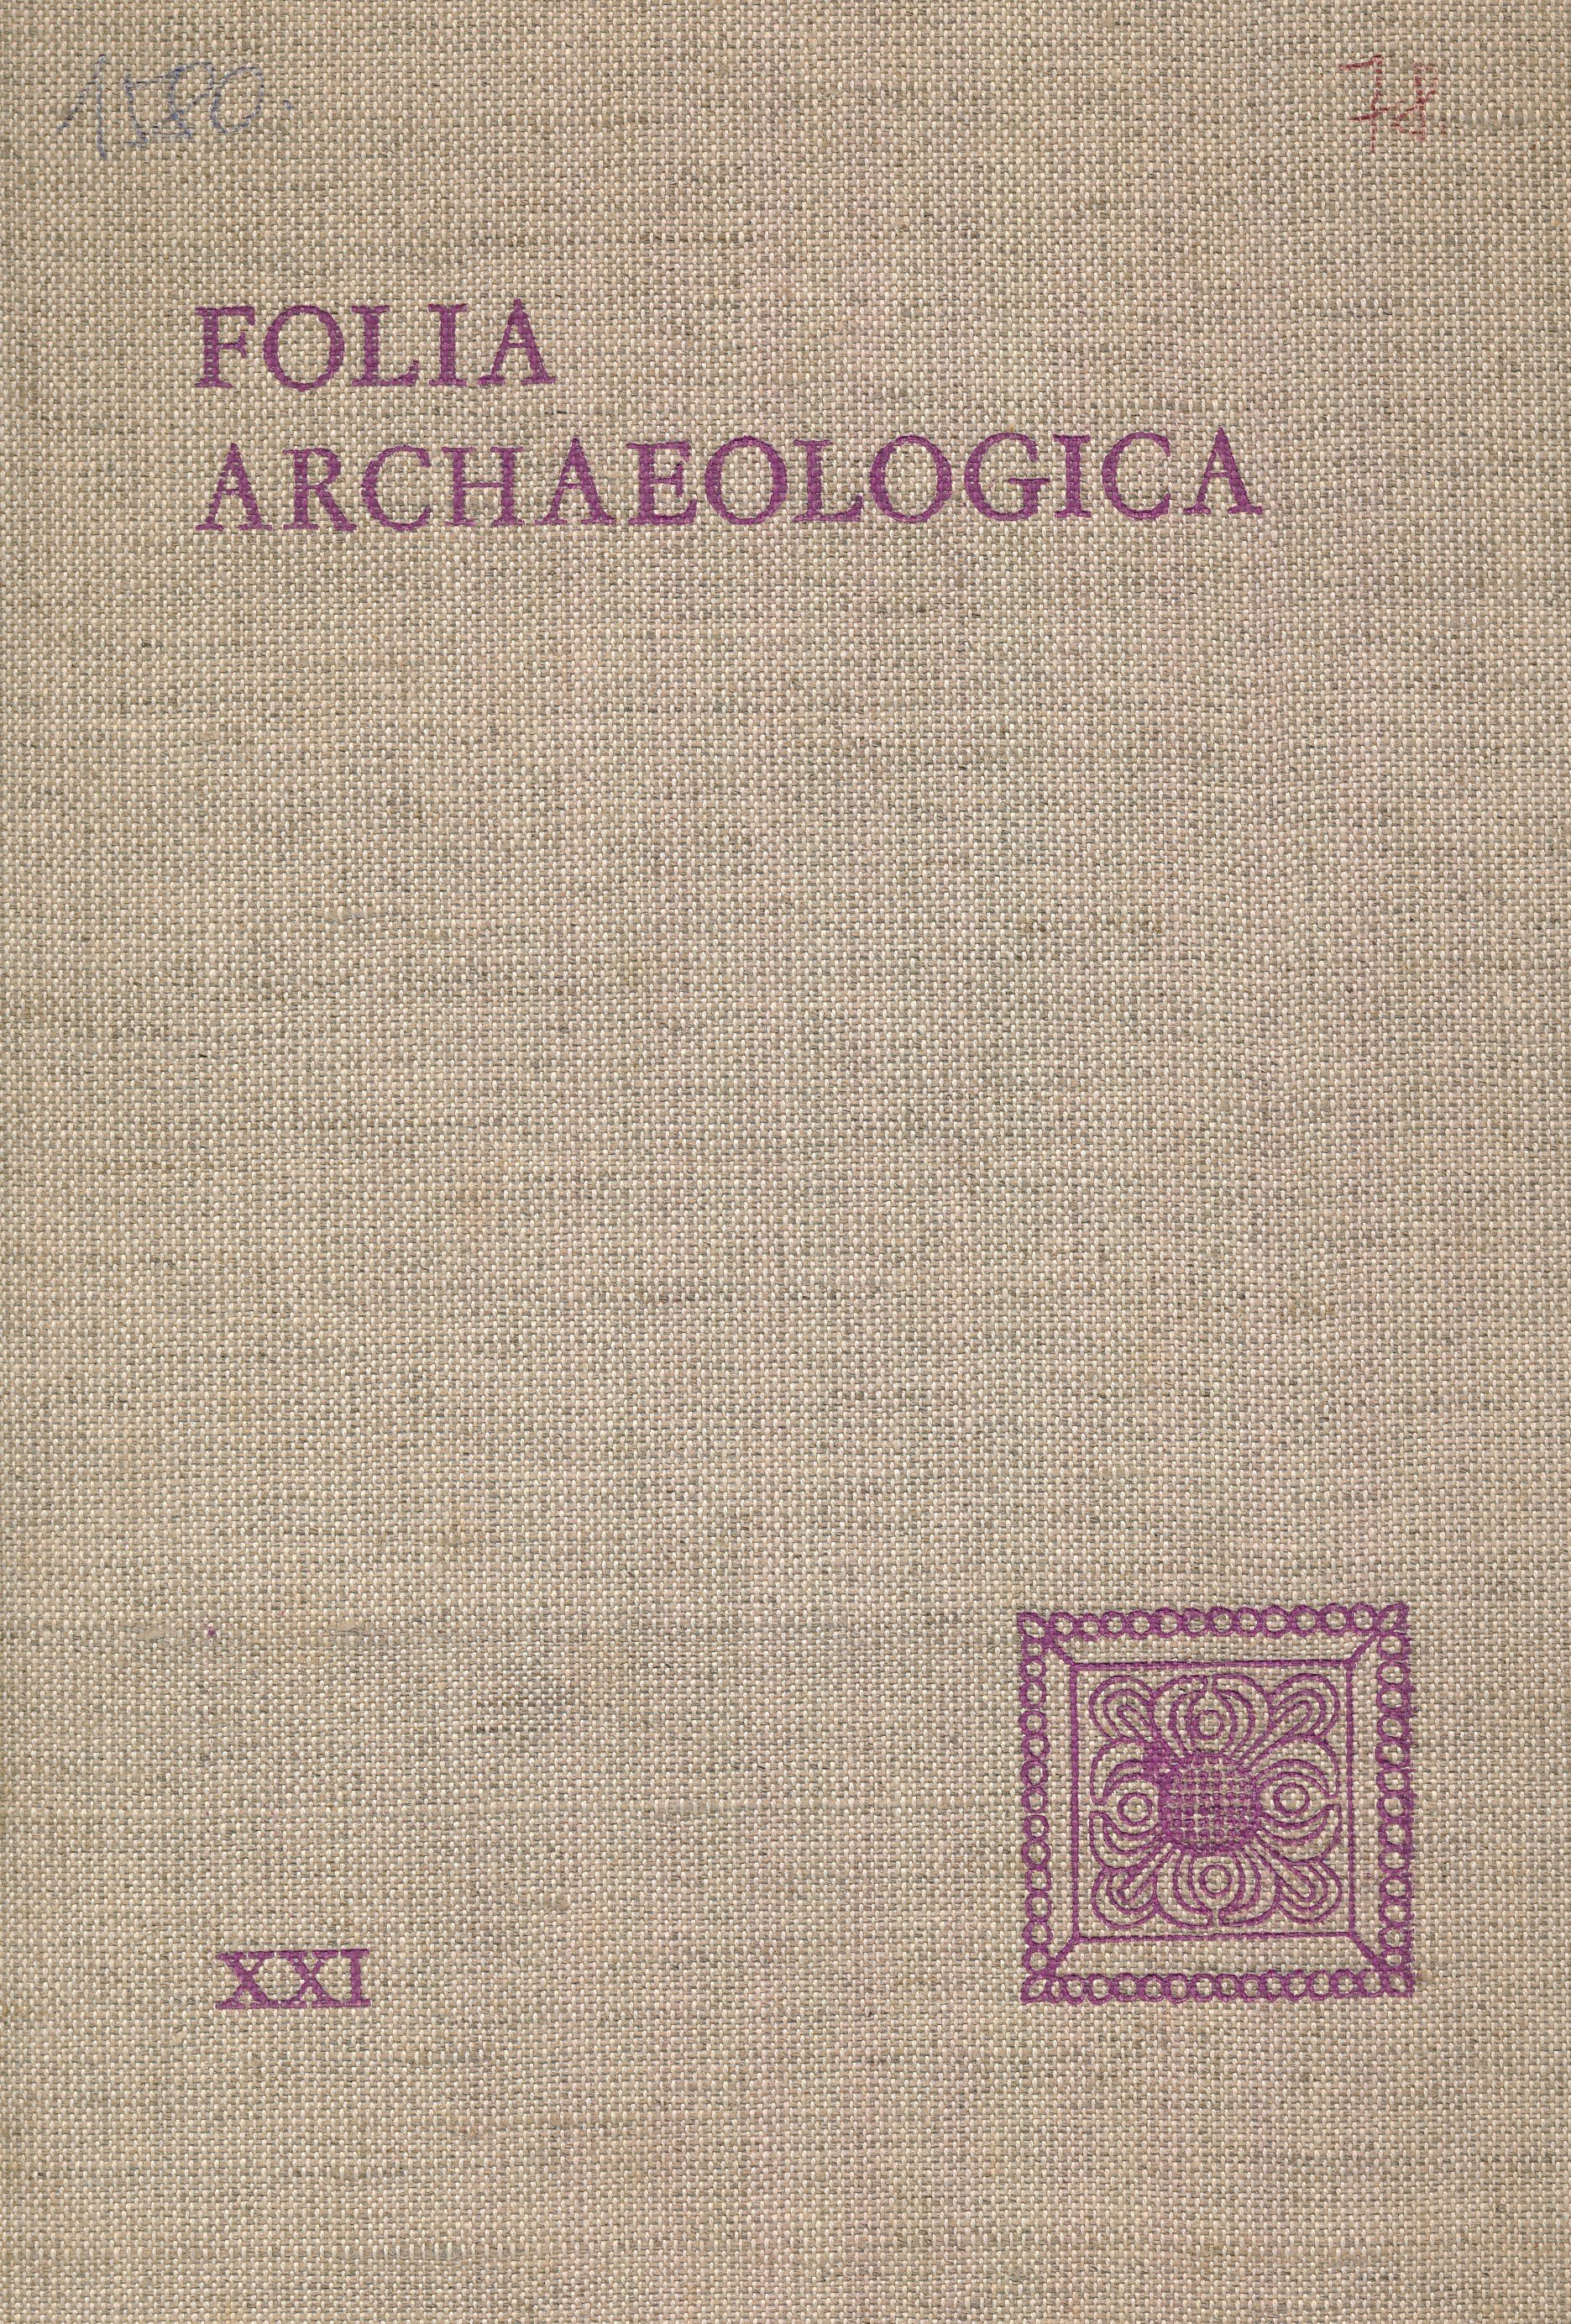 Folia archaeologica XXI. (Erkel Ferenc Területi Múzeum, Gyula CC BY-NC-SA)